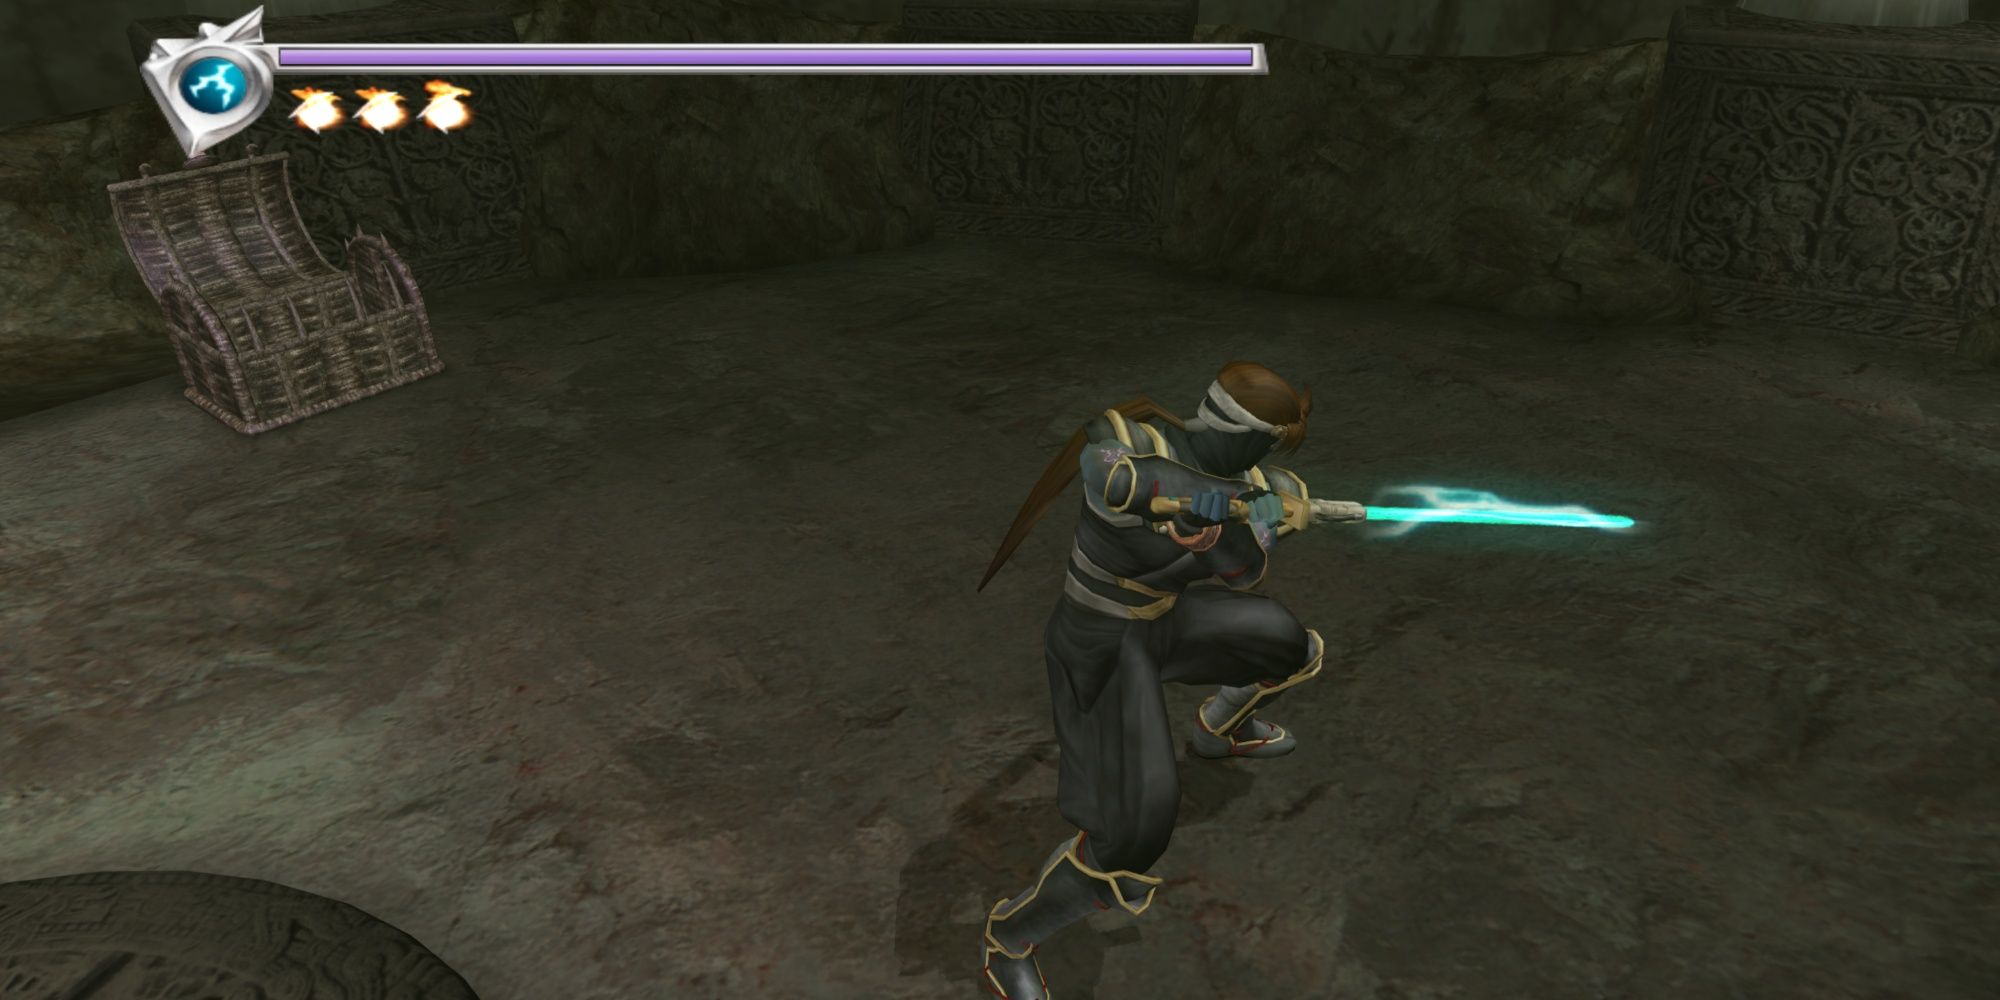 Ryu Hayabusa wielding the Plasma Saber in Ninja Gaiden Black.